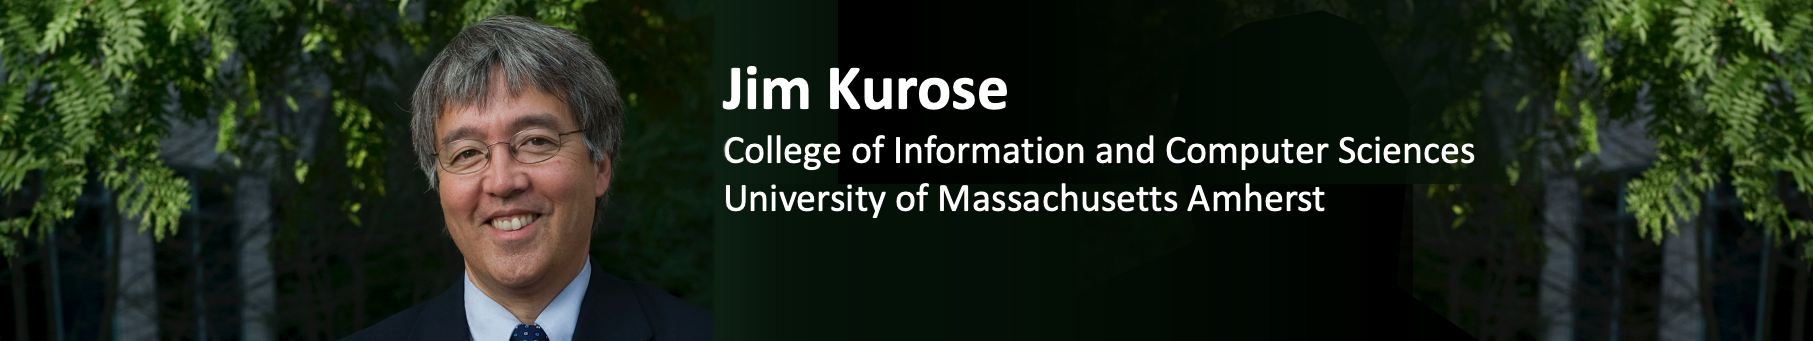 Jim Kurose homepage